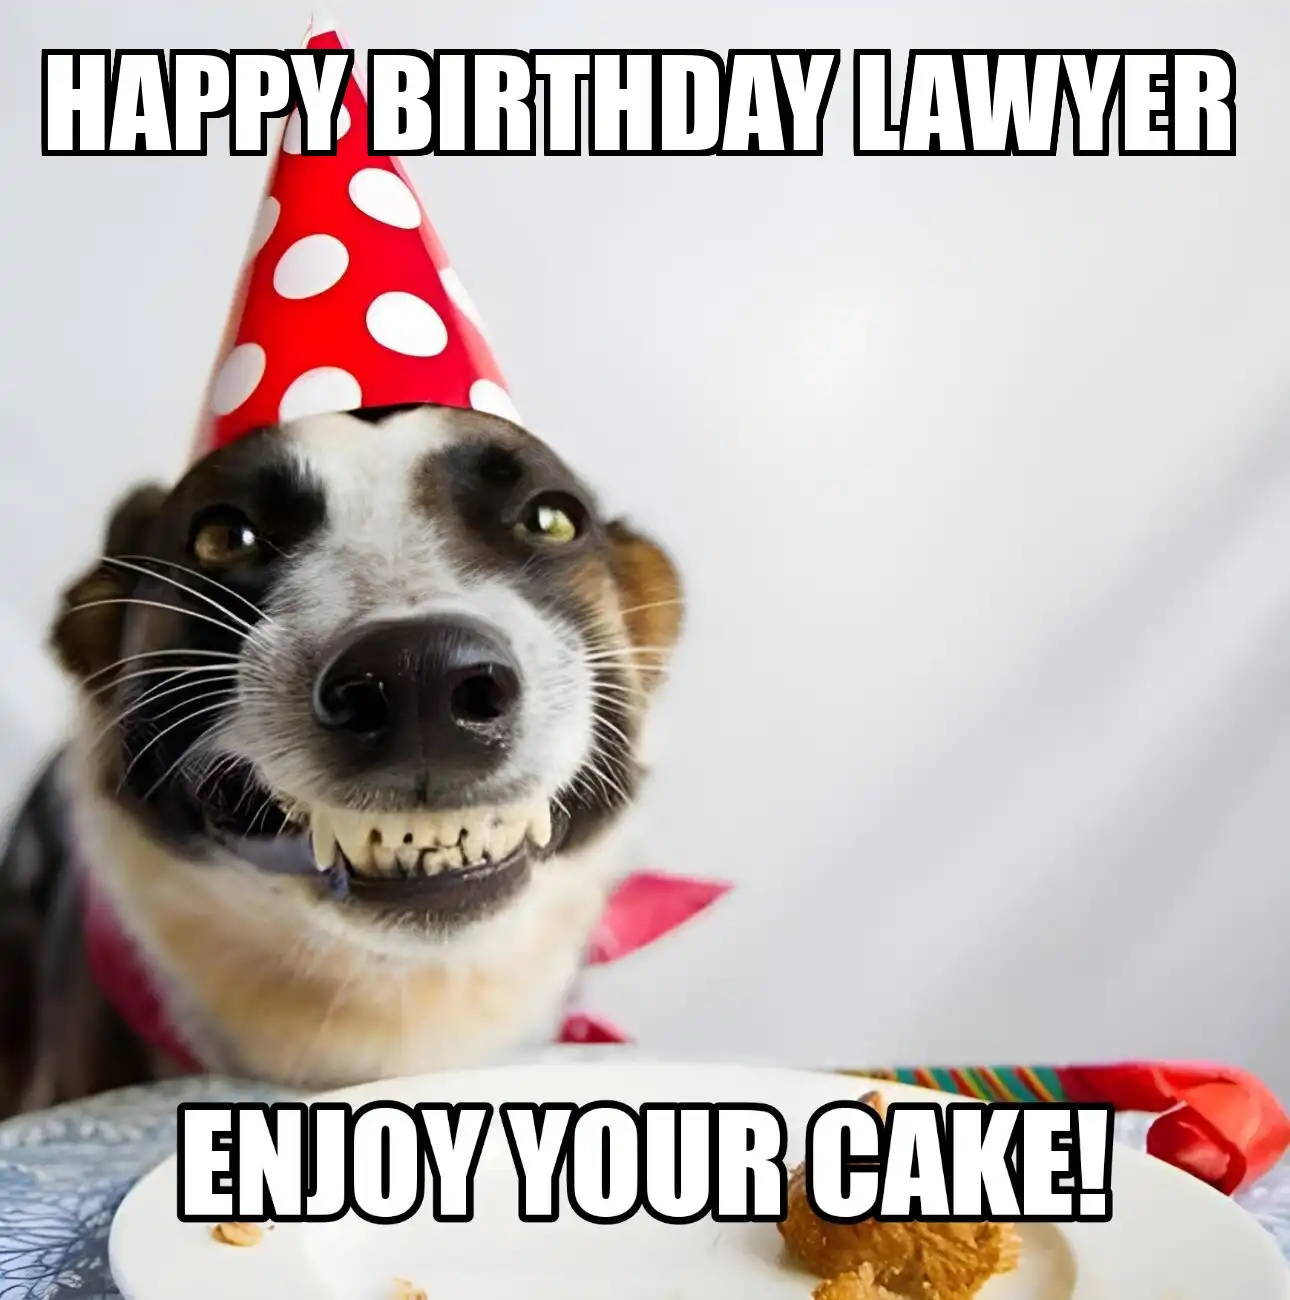 Happy Birthday Lawyer Enjoy Your Cake Dog Meme